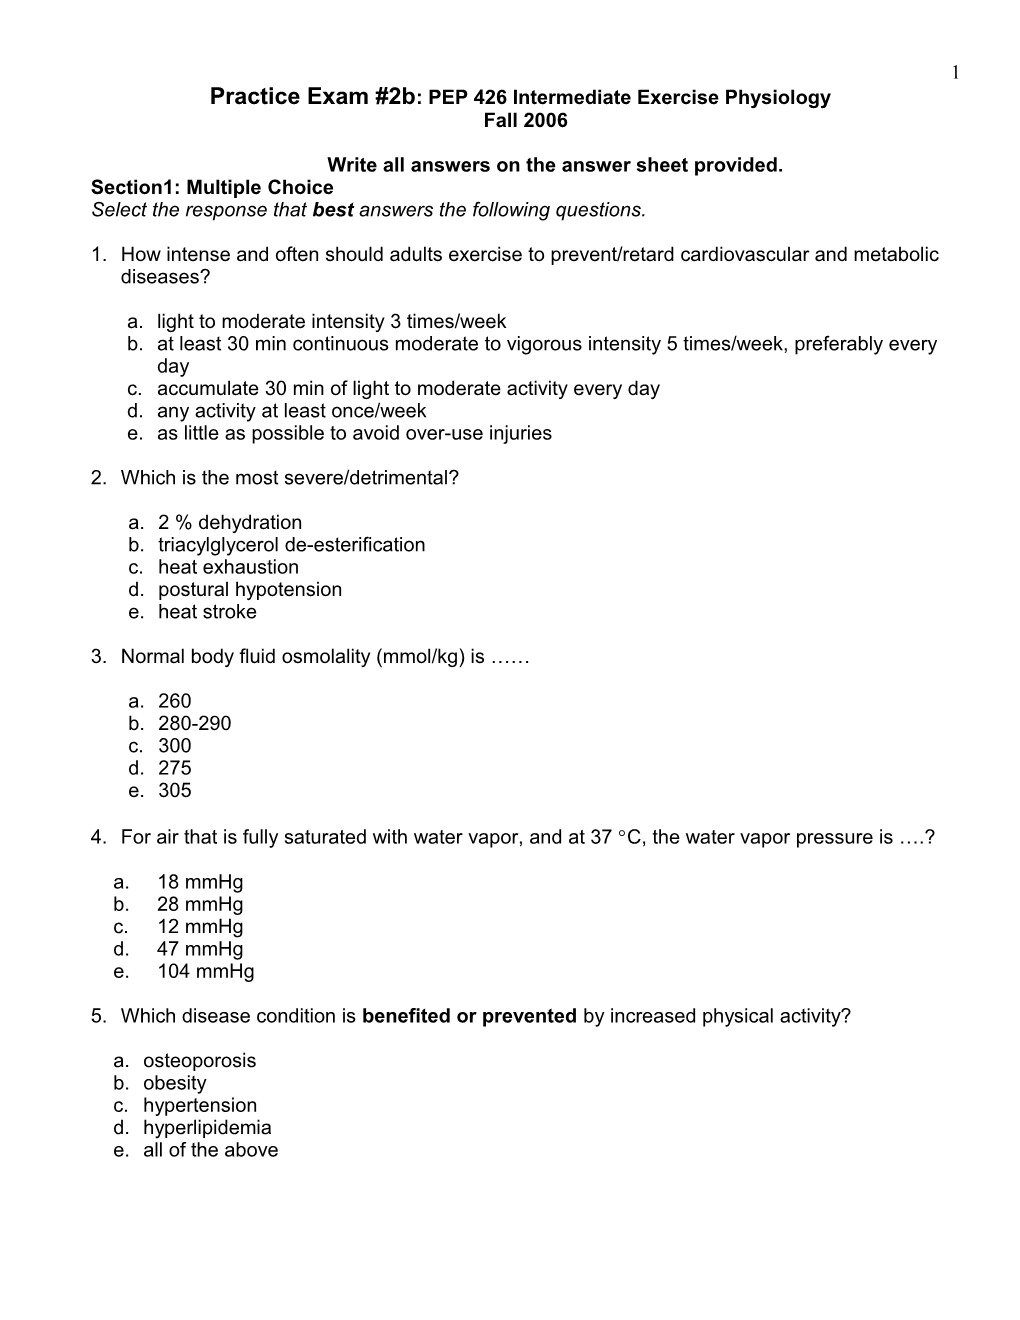 Practice Exam #2B: PEP 426 Intermediate Exercise Physiology